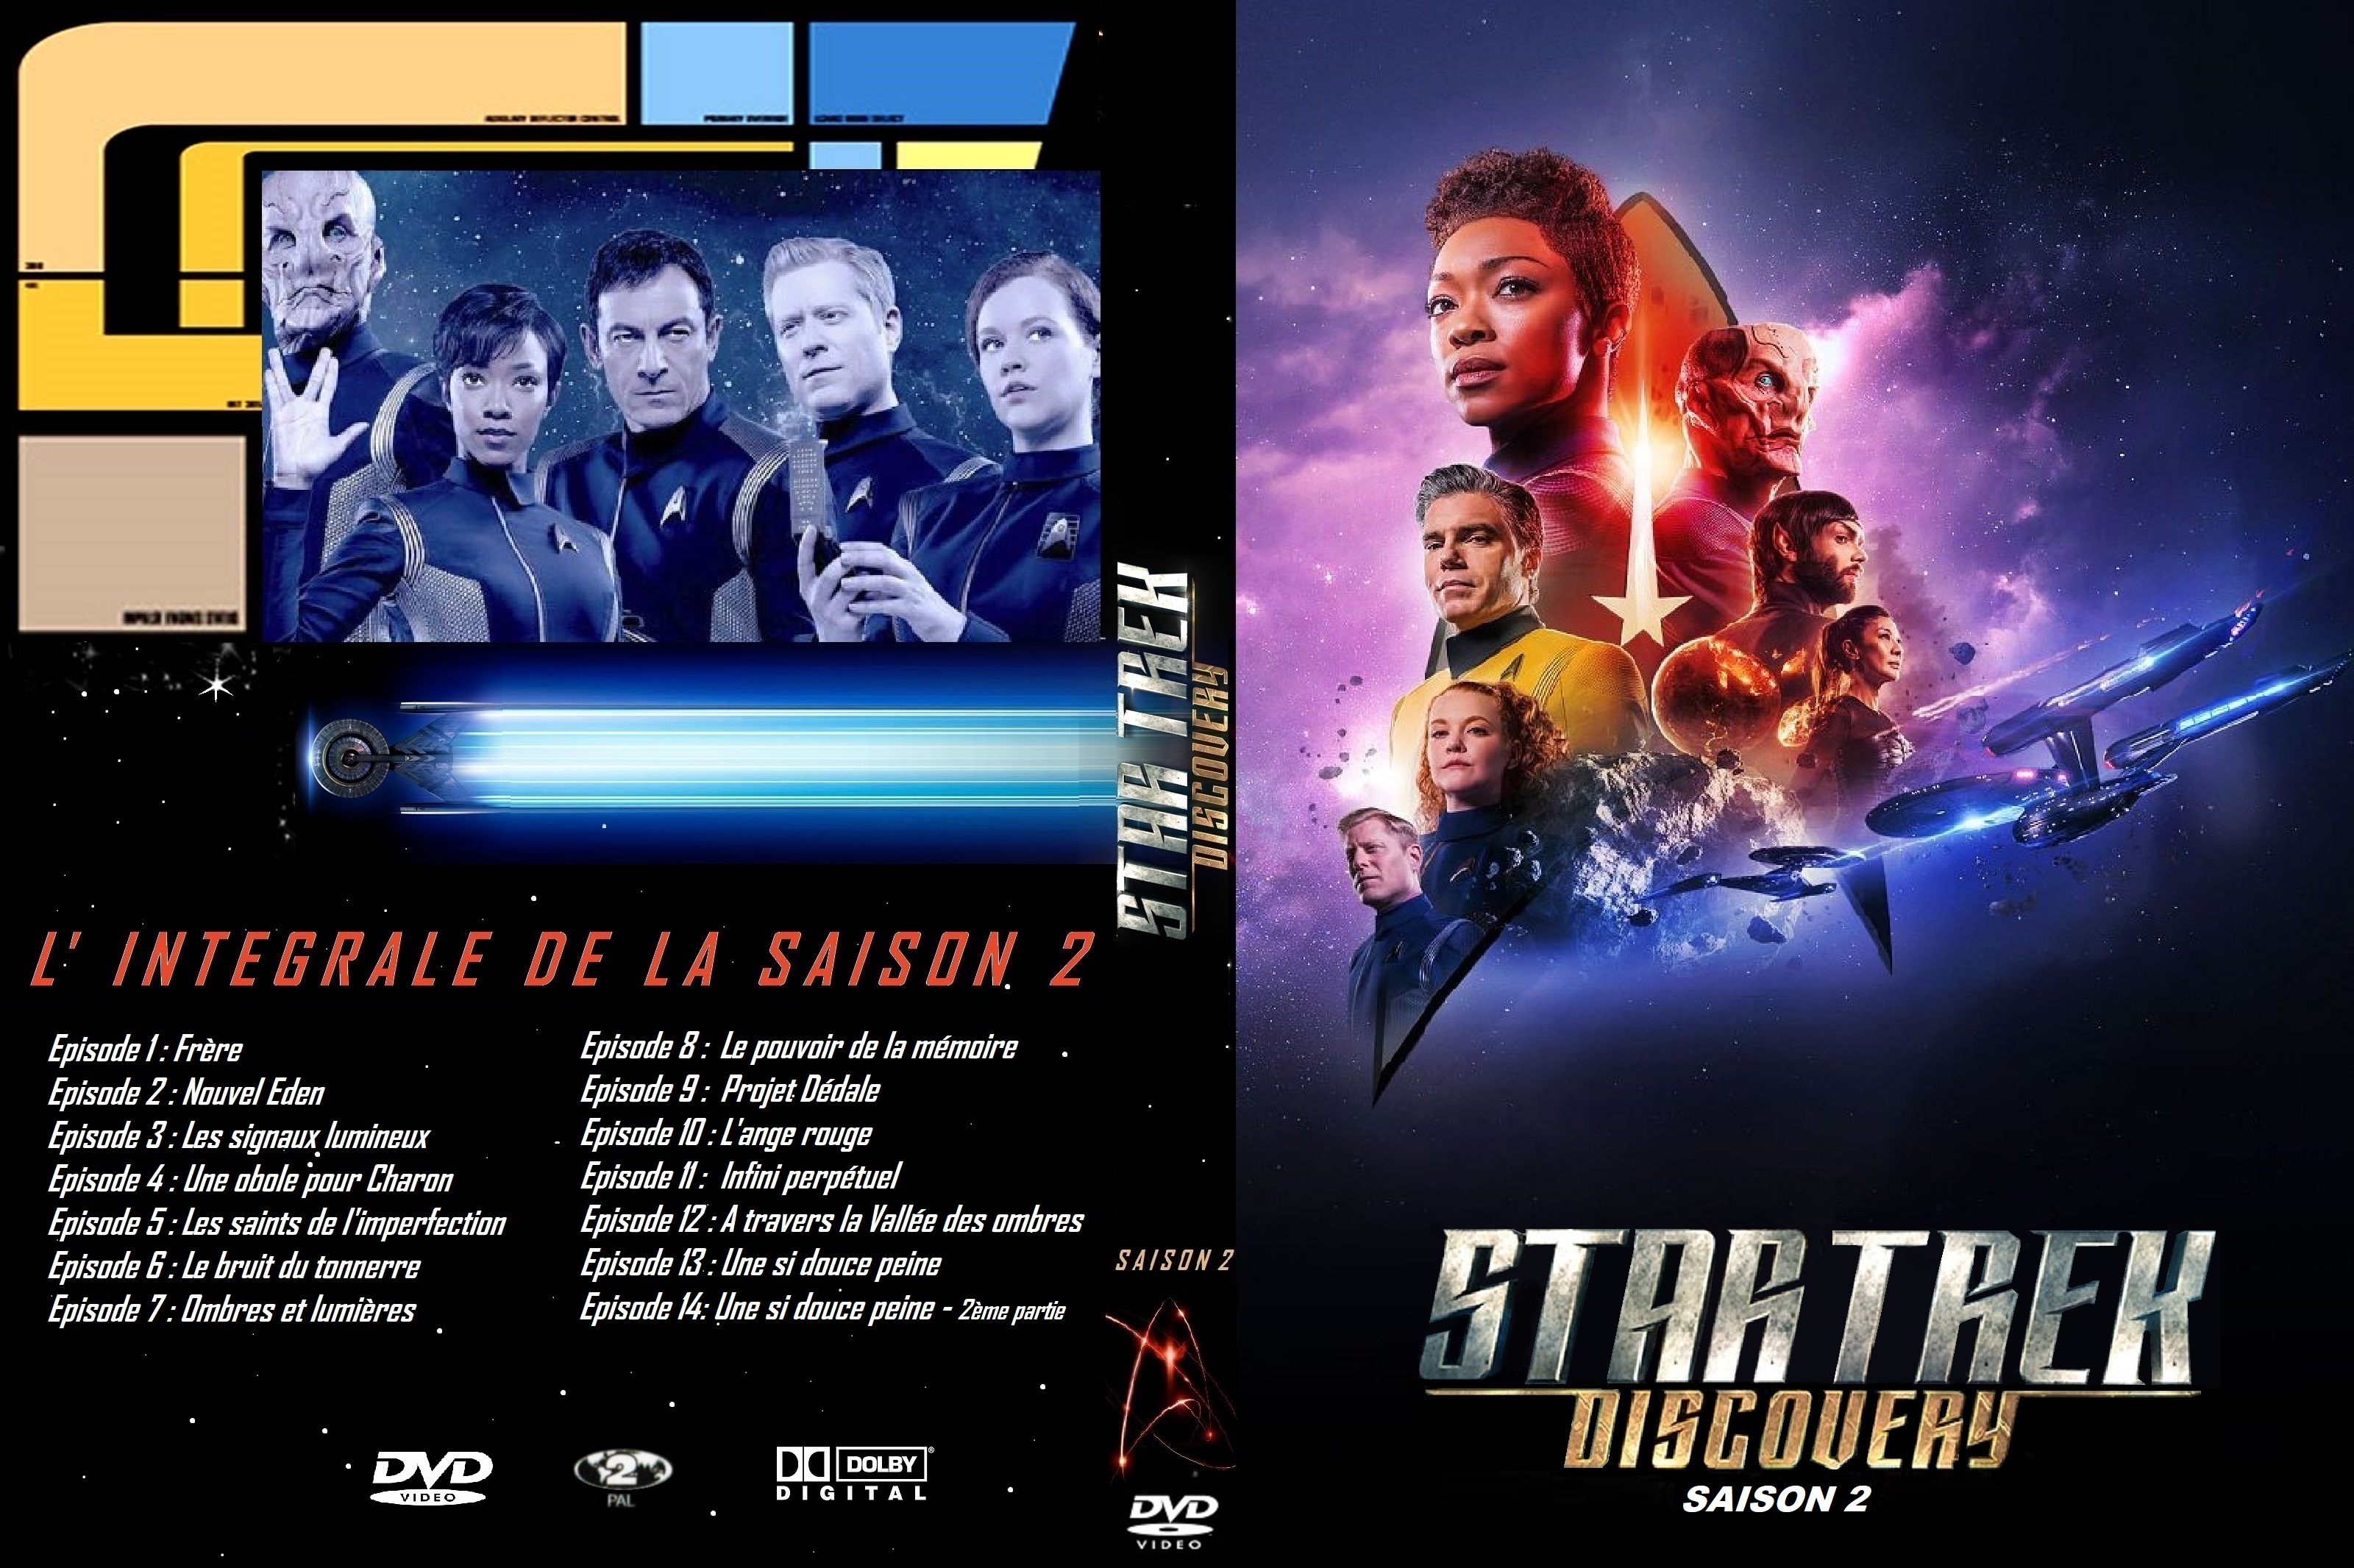 Jaquette DVD Star Trek Discovery saison 2 custom v2